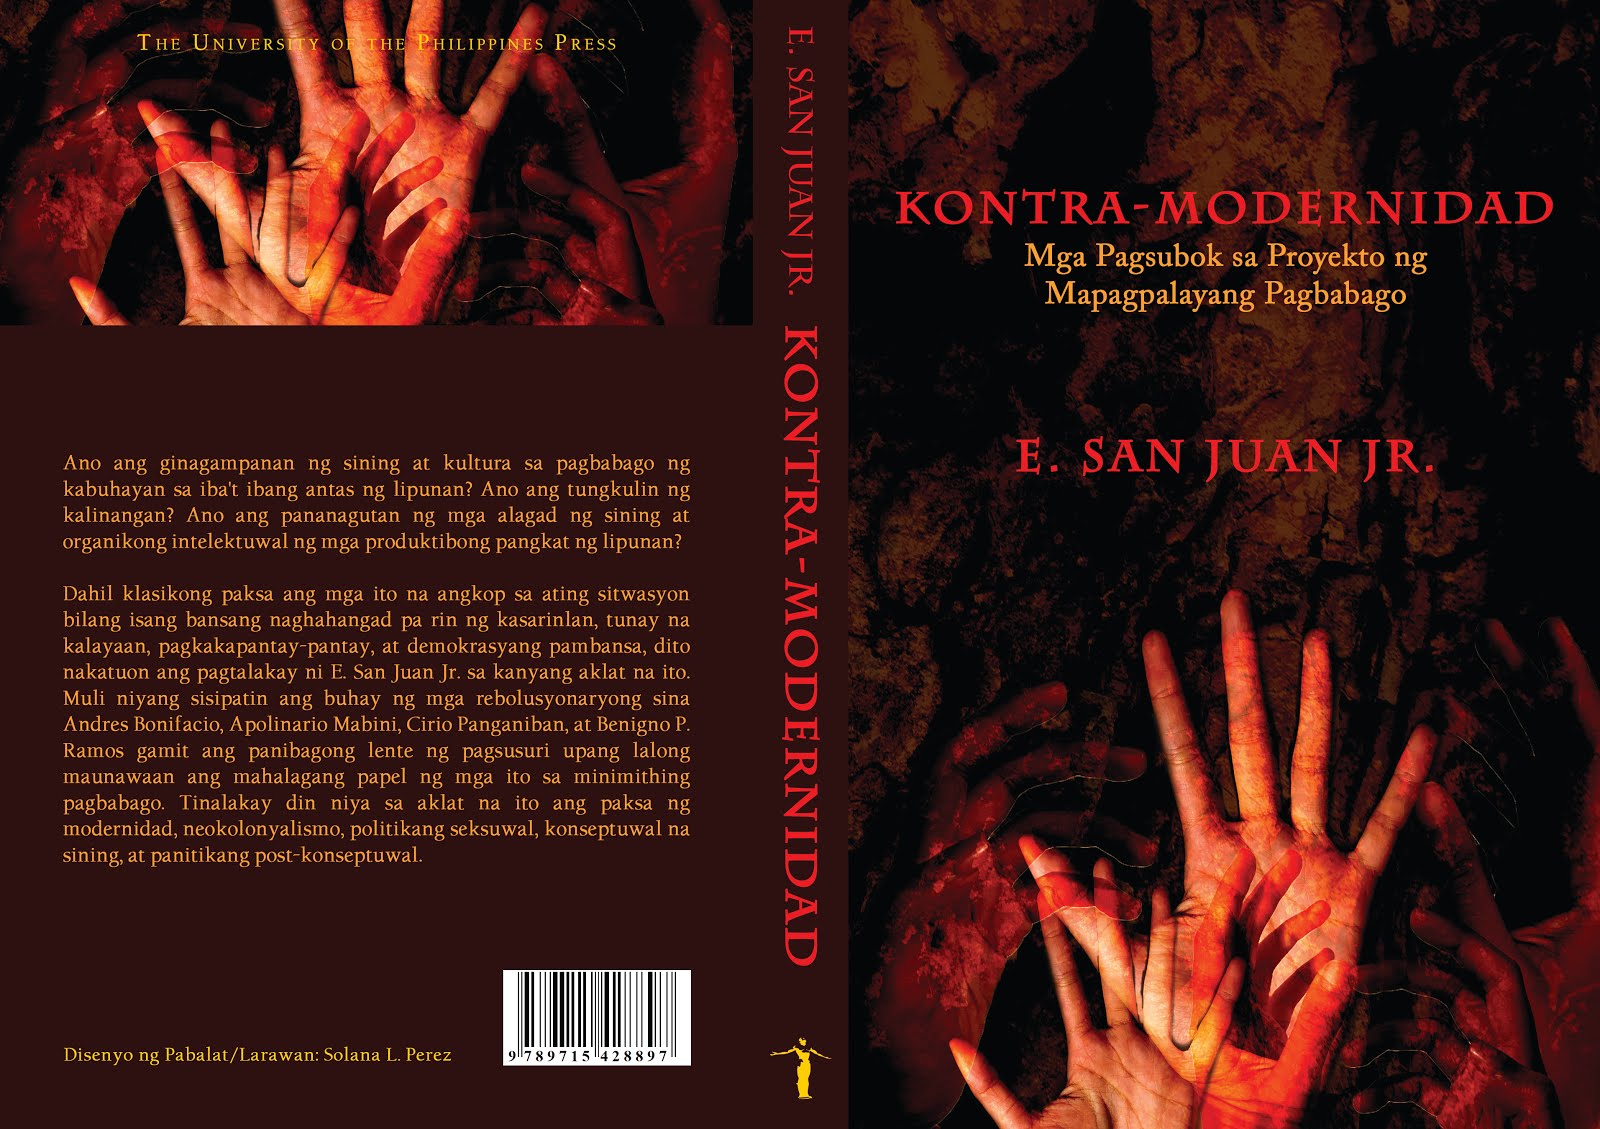 KONTRA-MODERNIDAD (University of the Philippines Press)